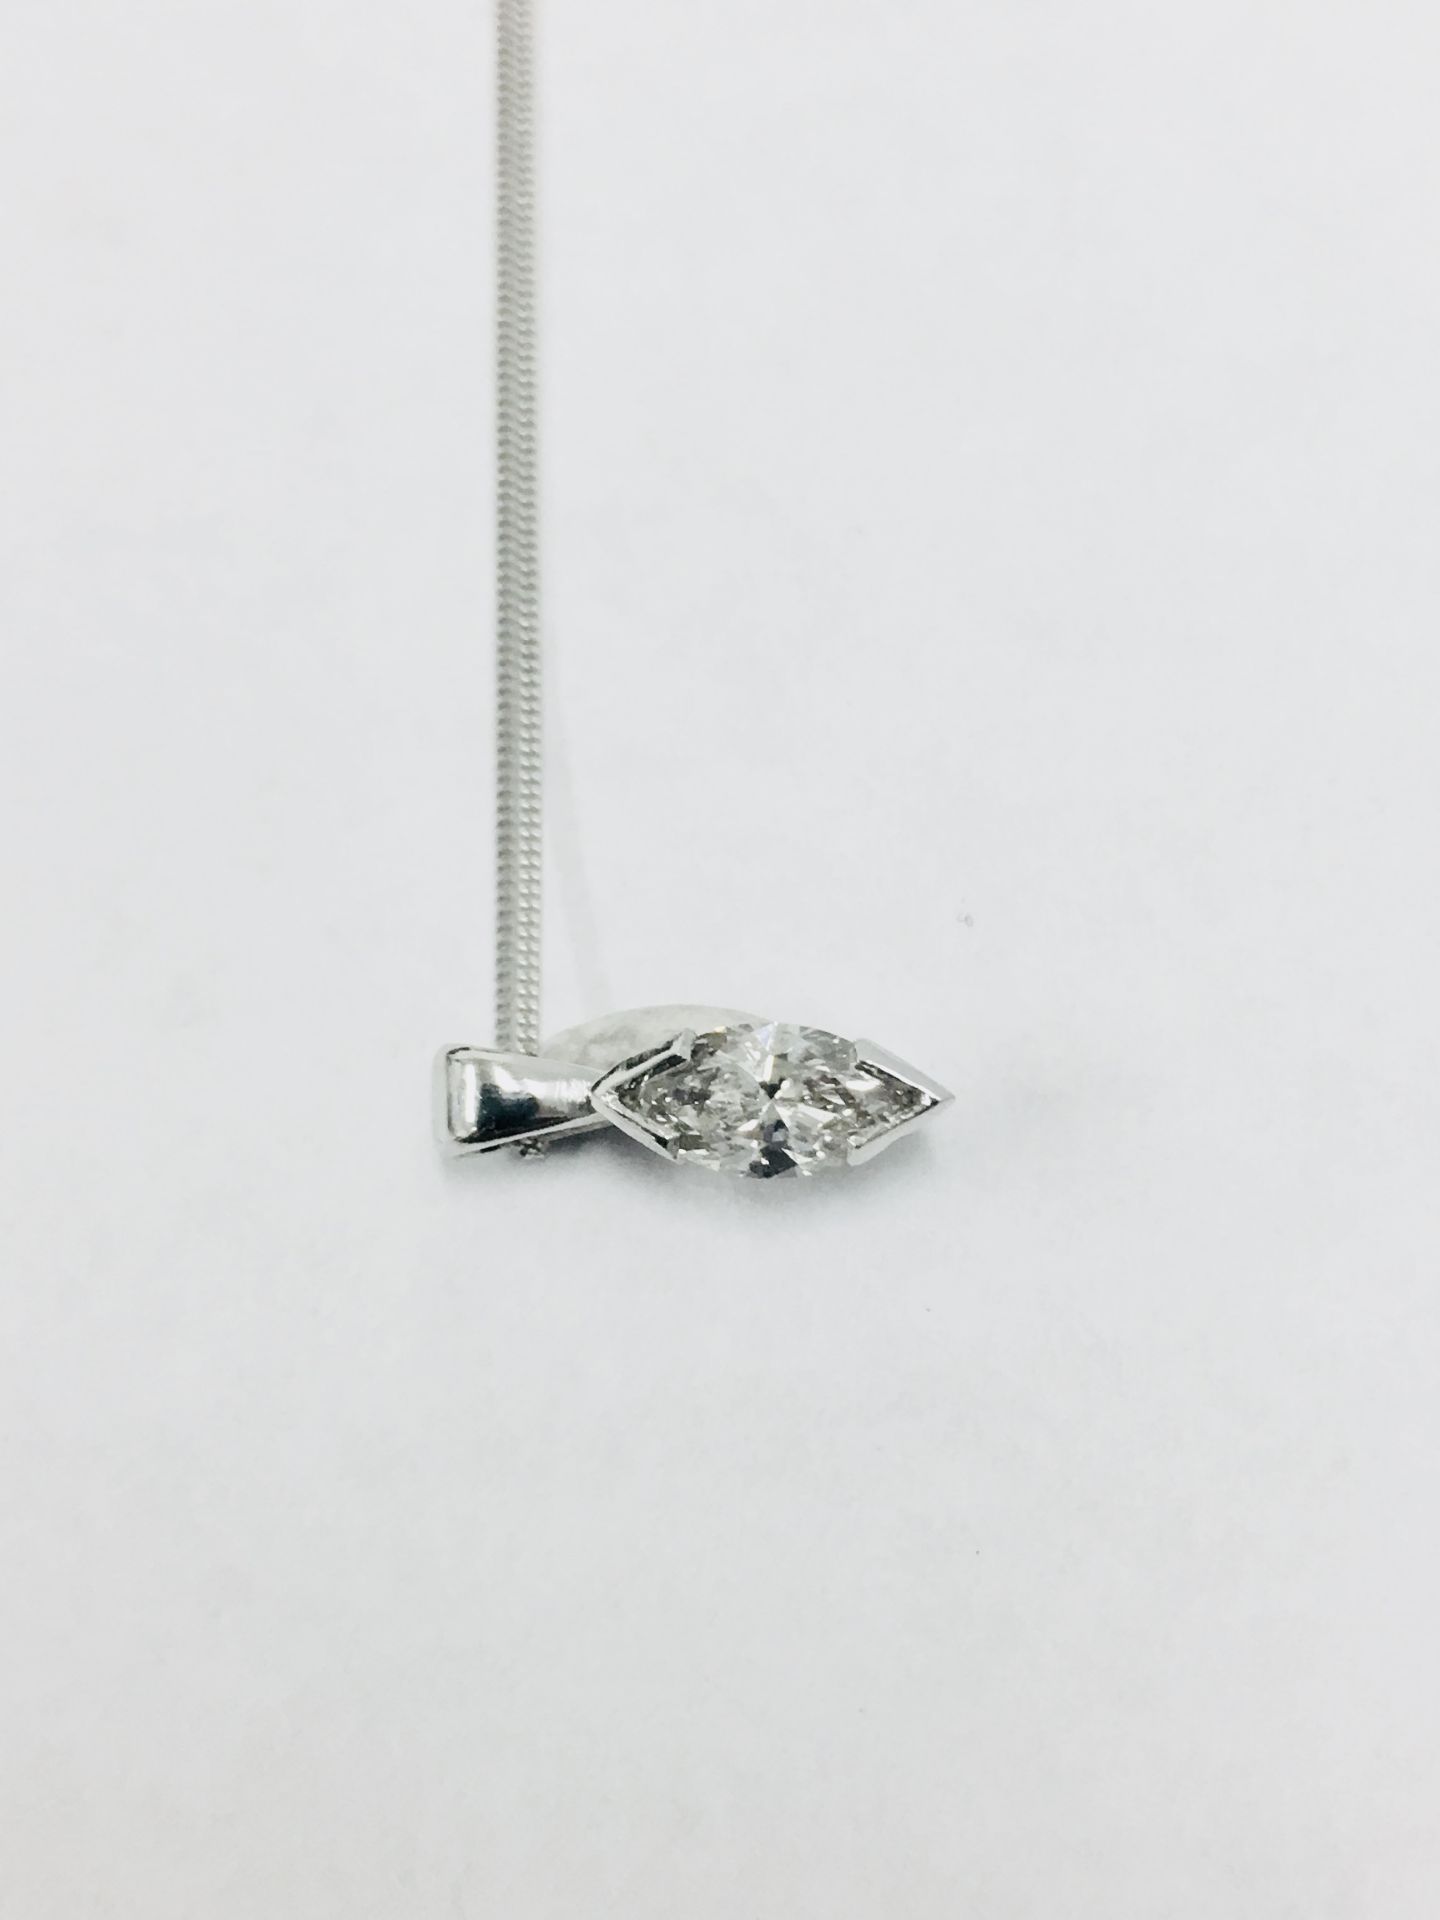 0.45Ct Diamond Pendant With A Marquise Diamond. - Image 2 of 2